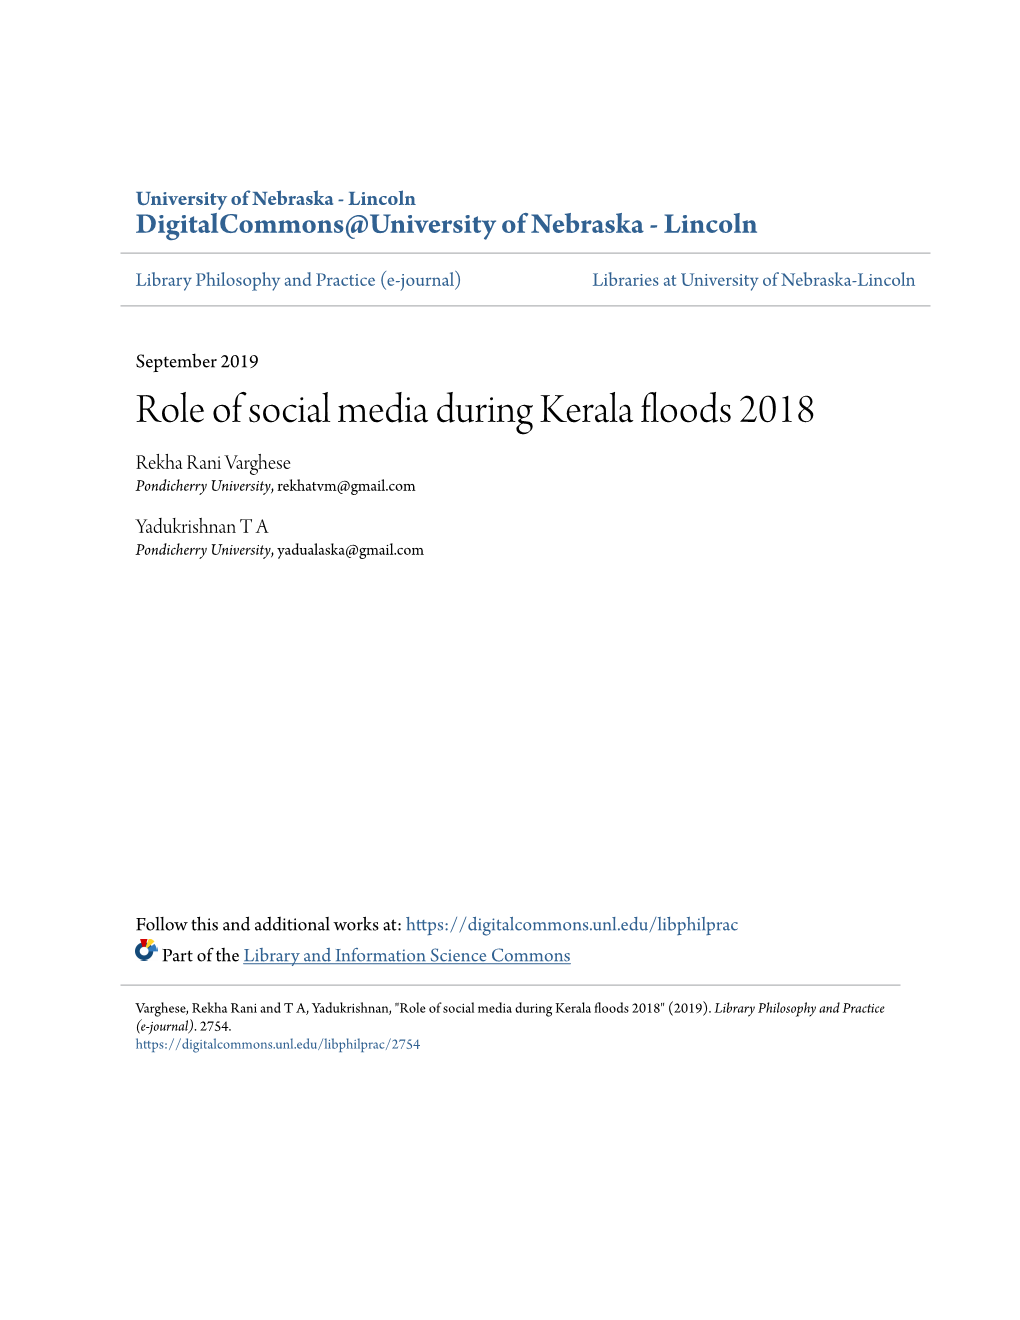 Role of Social Media During Kerala Floods 2018 Rekha Rani Varghese Pondicherry University, Rekhatvm@Gmail.Com